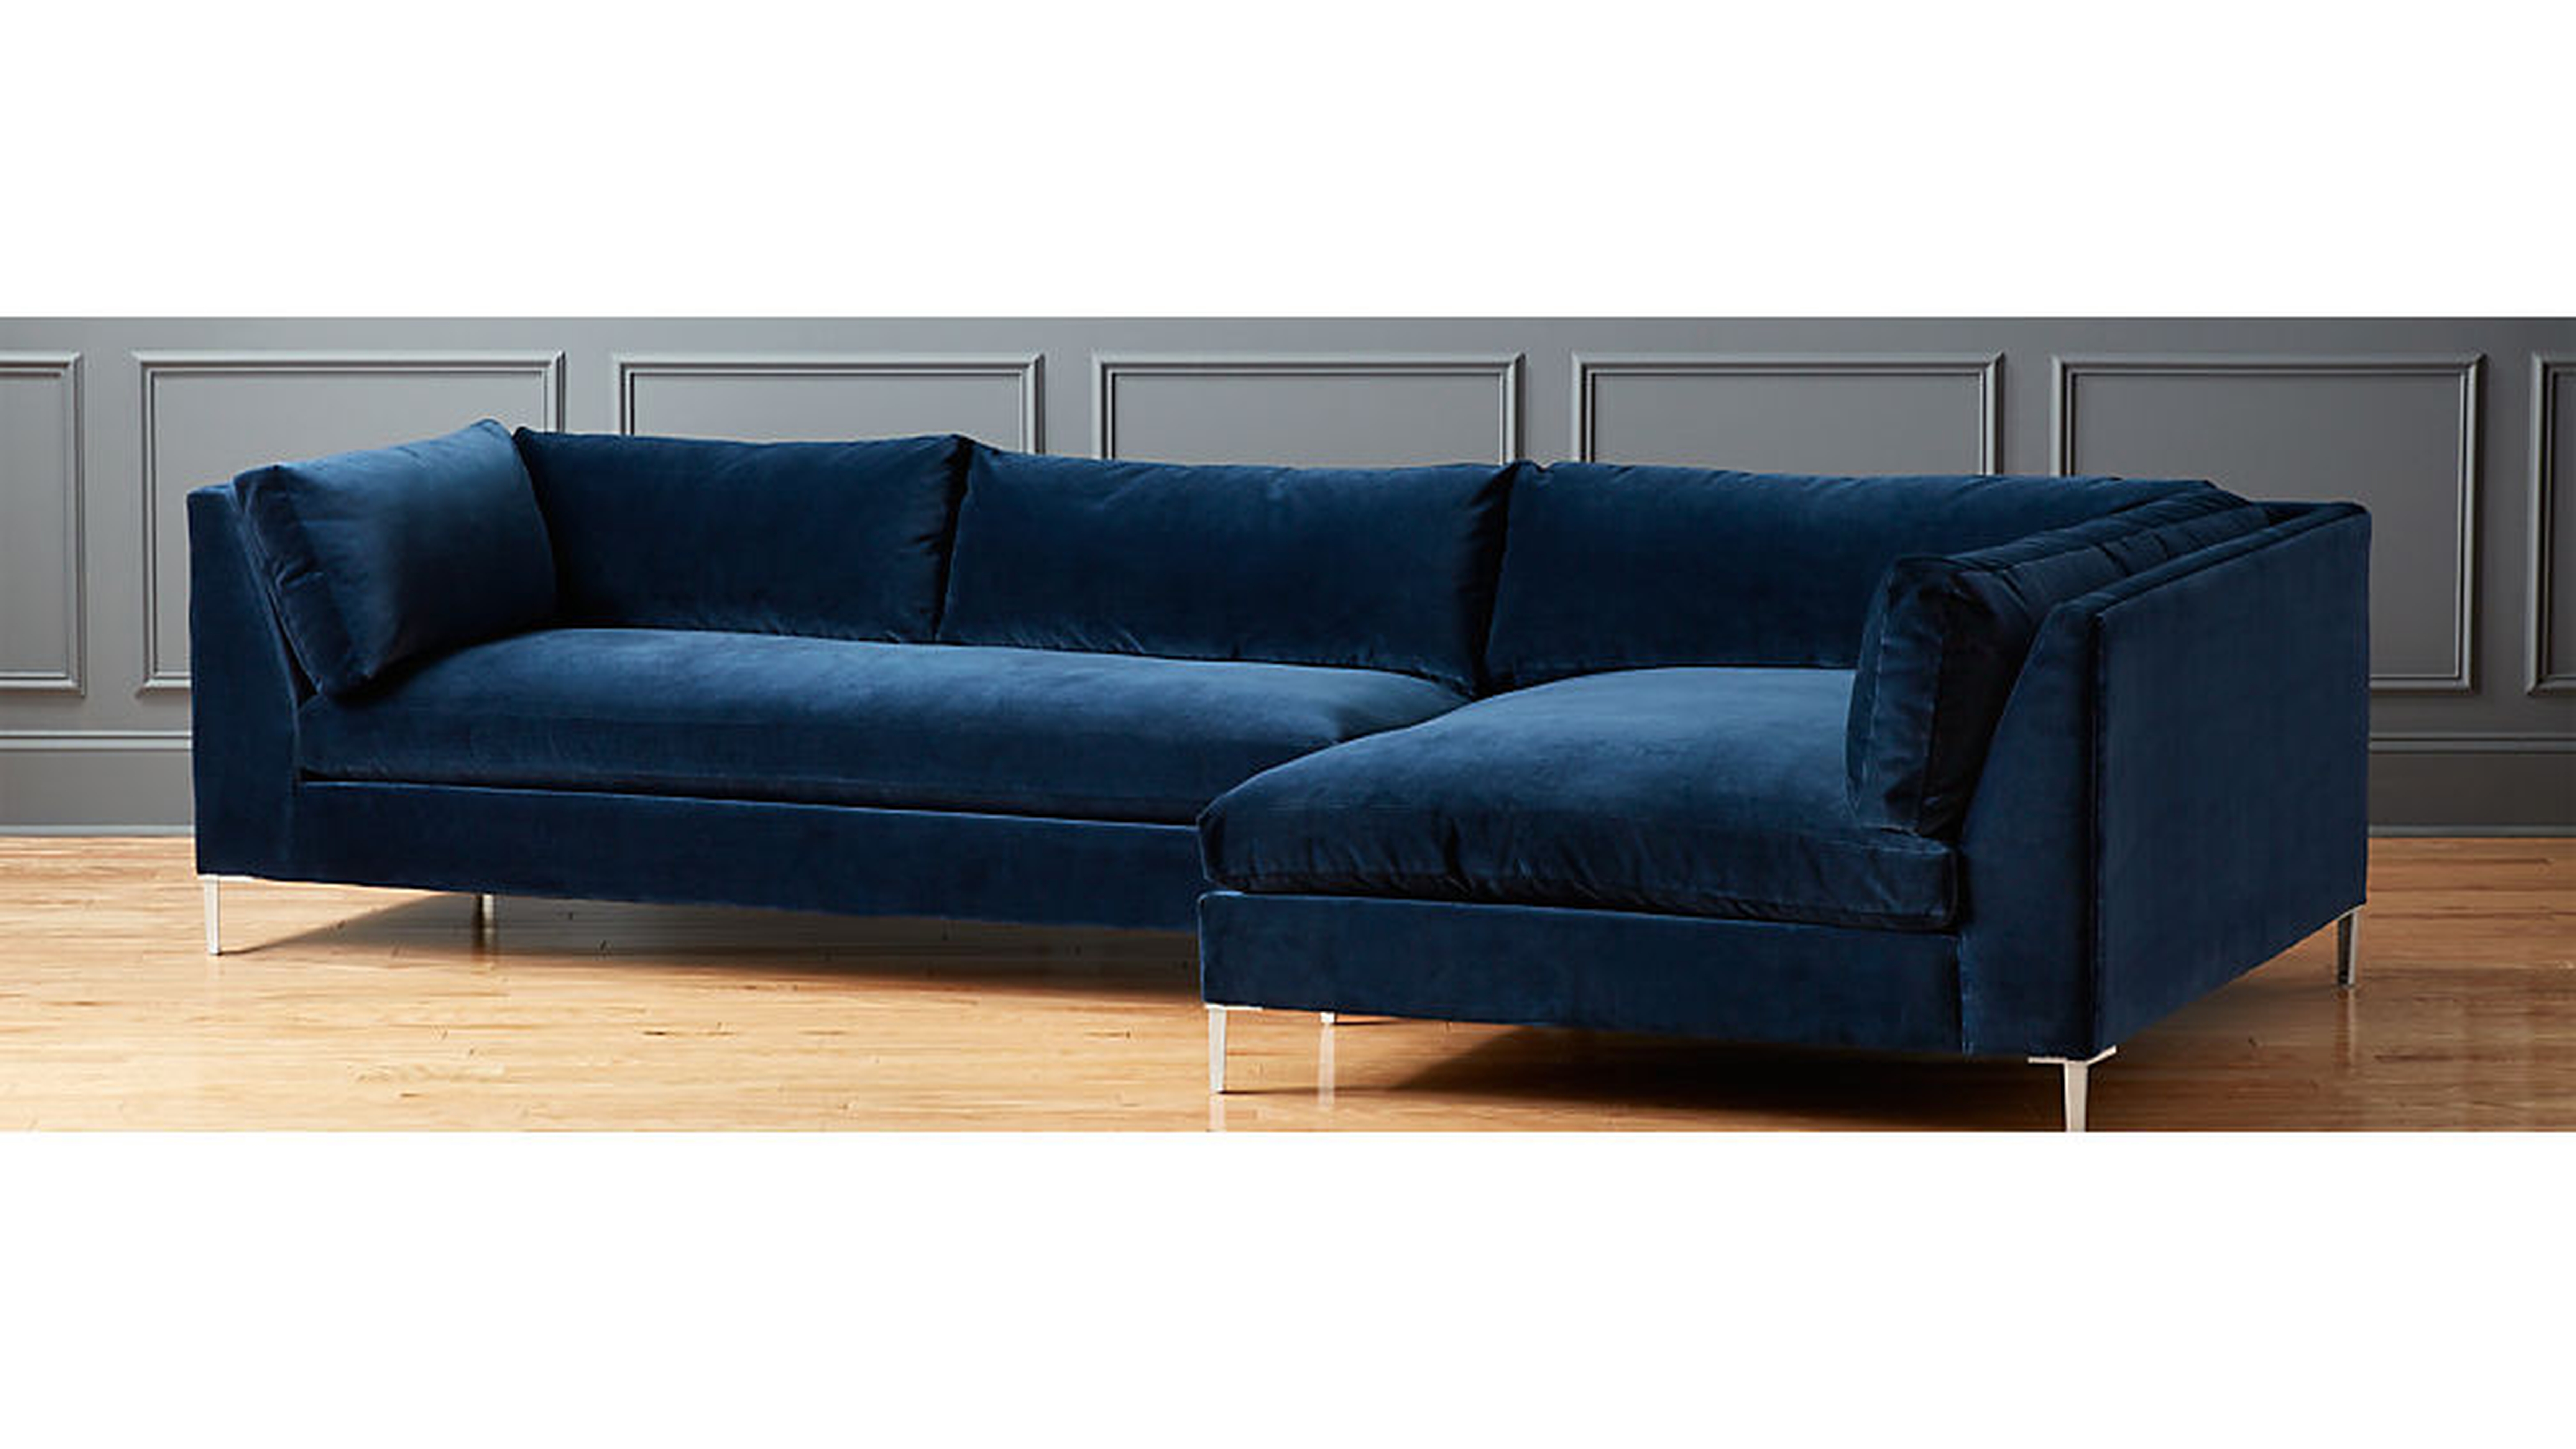 Decker 2-piece sectional sofa - Bella Bayoux - Right chaise - CB2